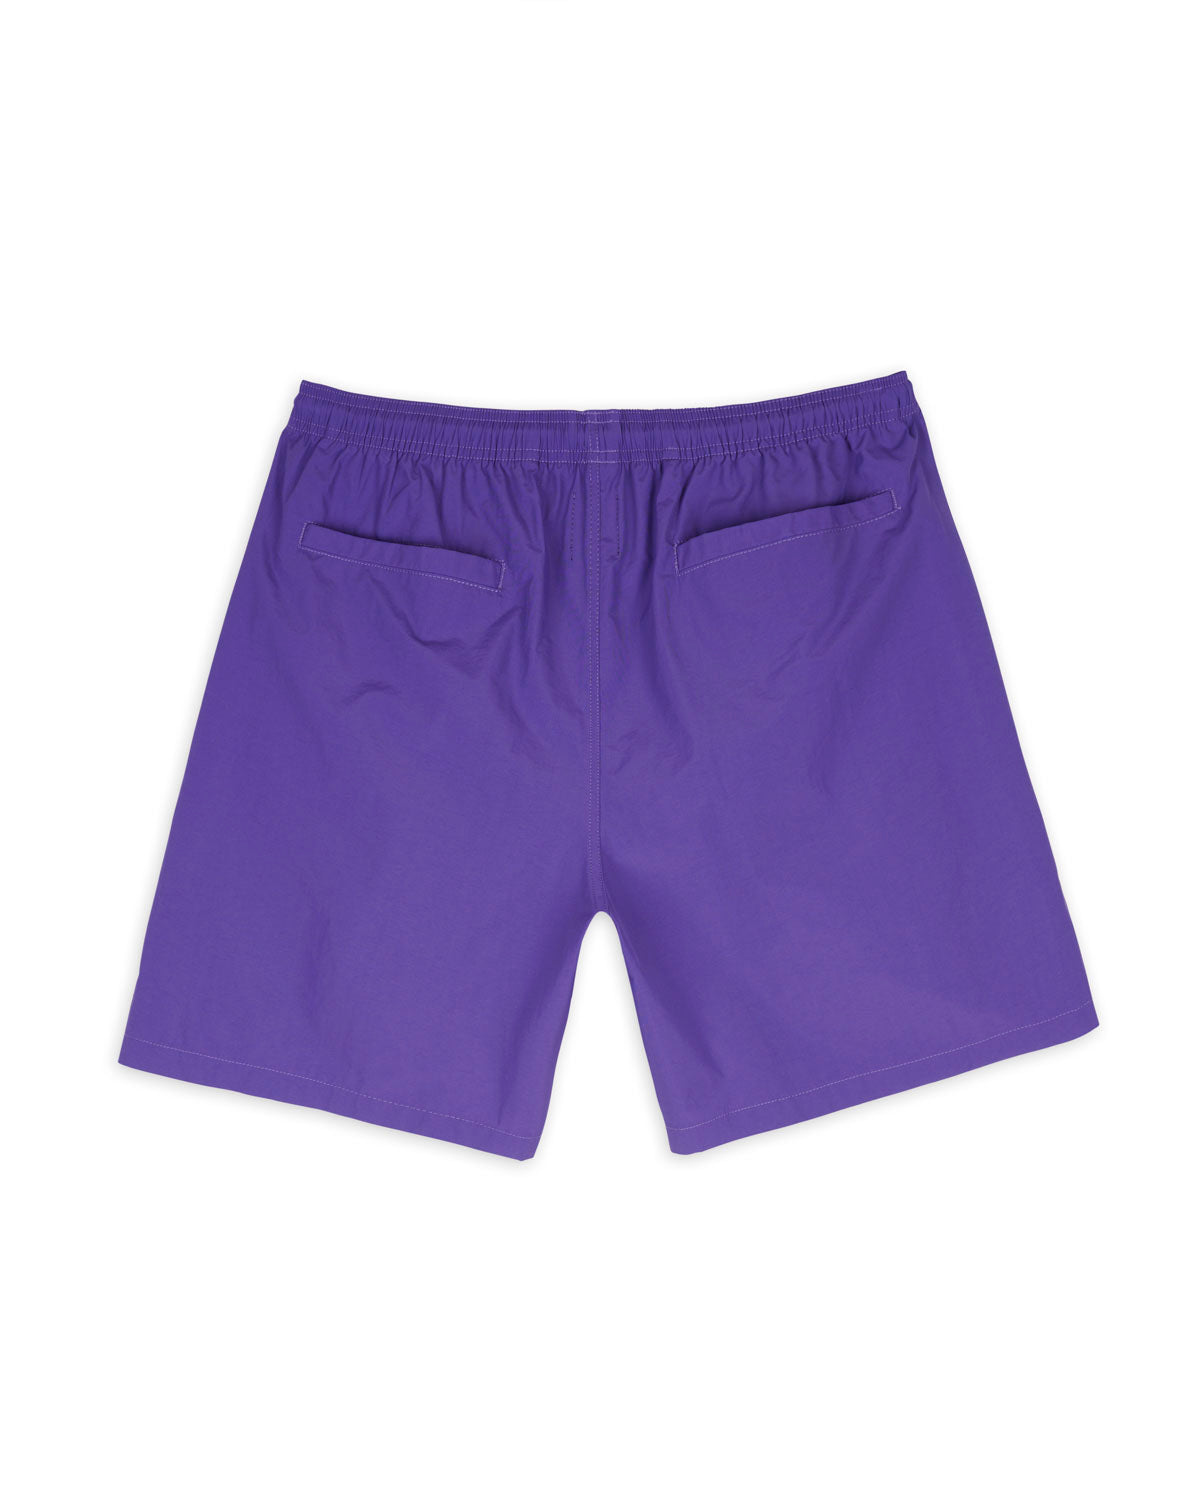 Kickers Shorts, Purple